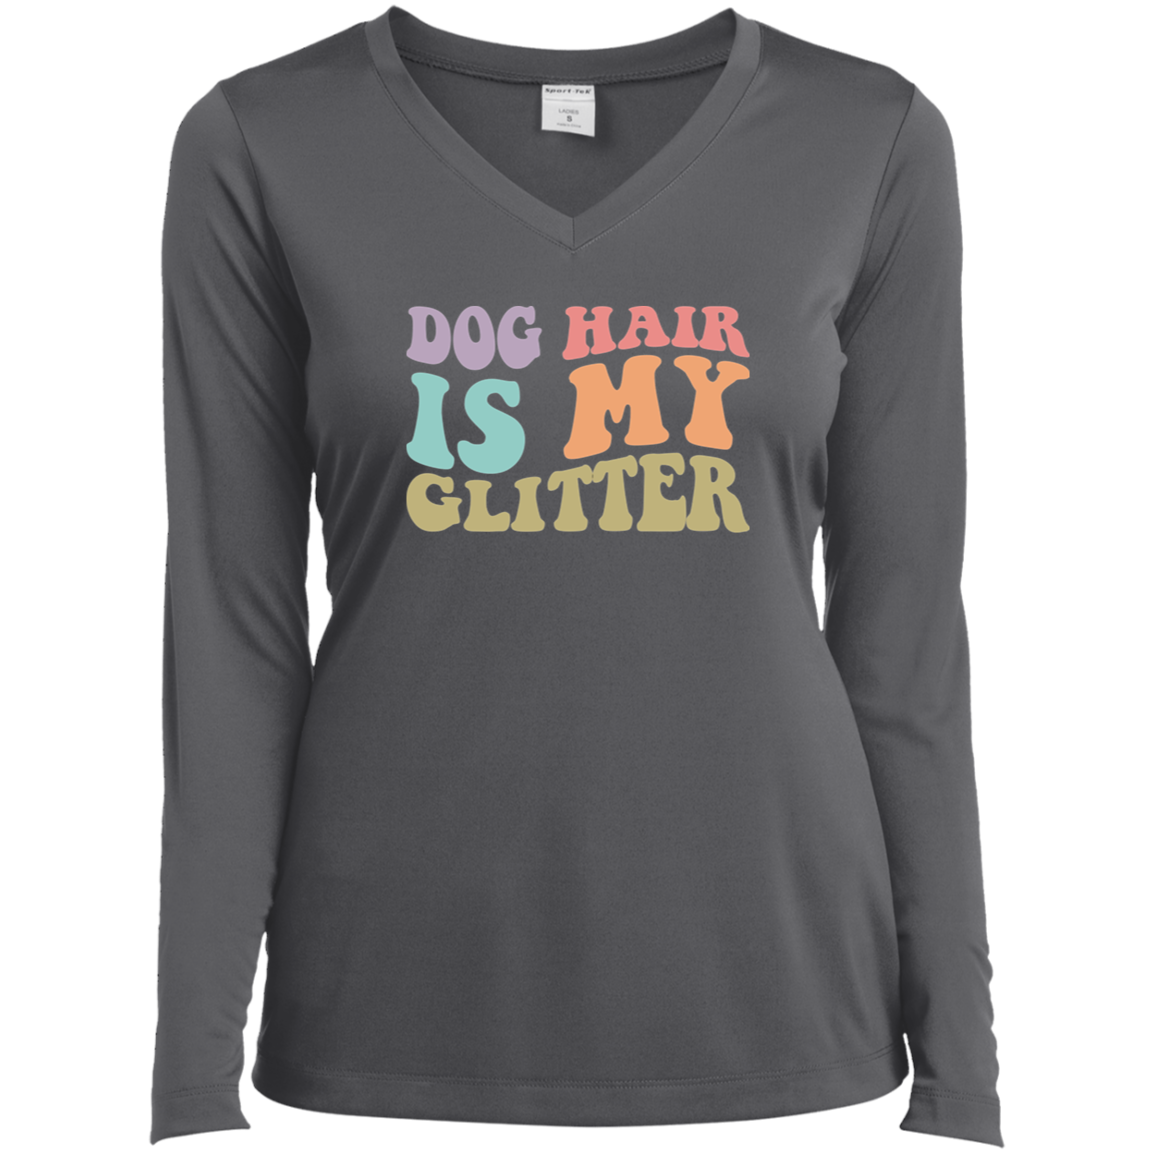 Dog Hair is My Glitter Ladies’ Long Sleeve Performance V-Neck Tee